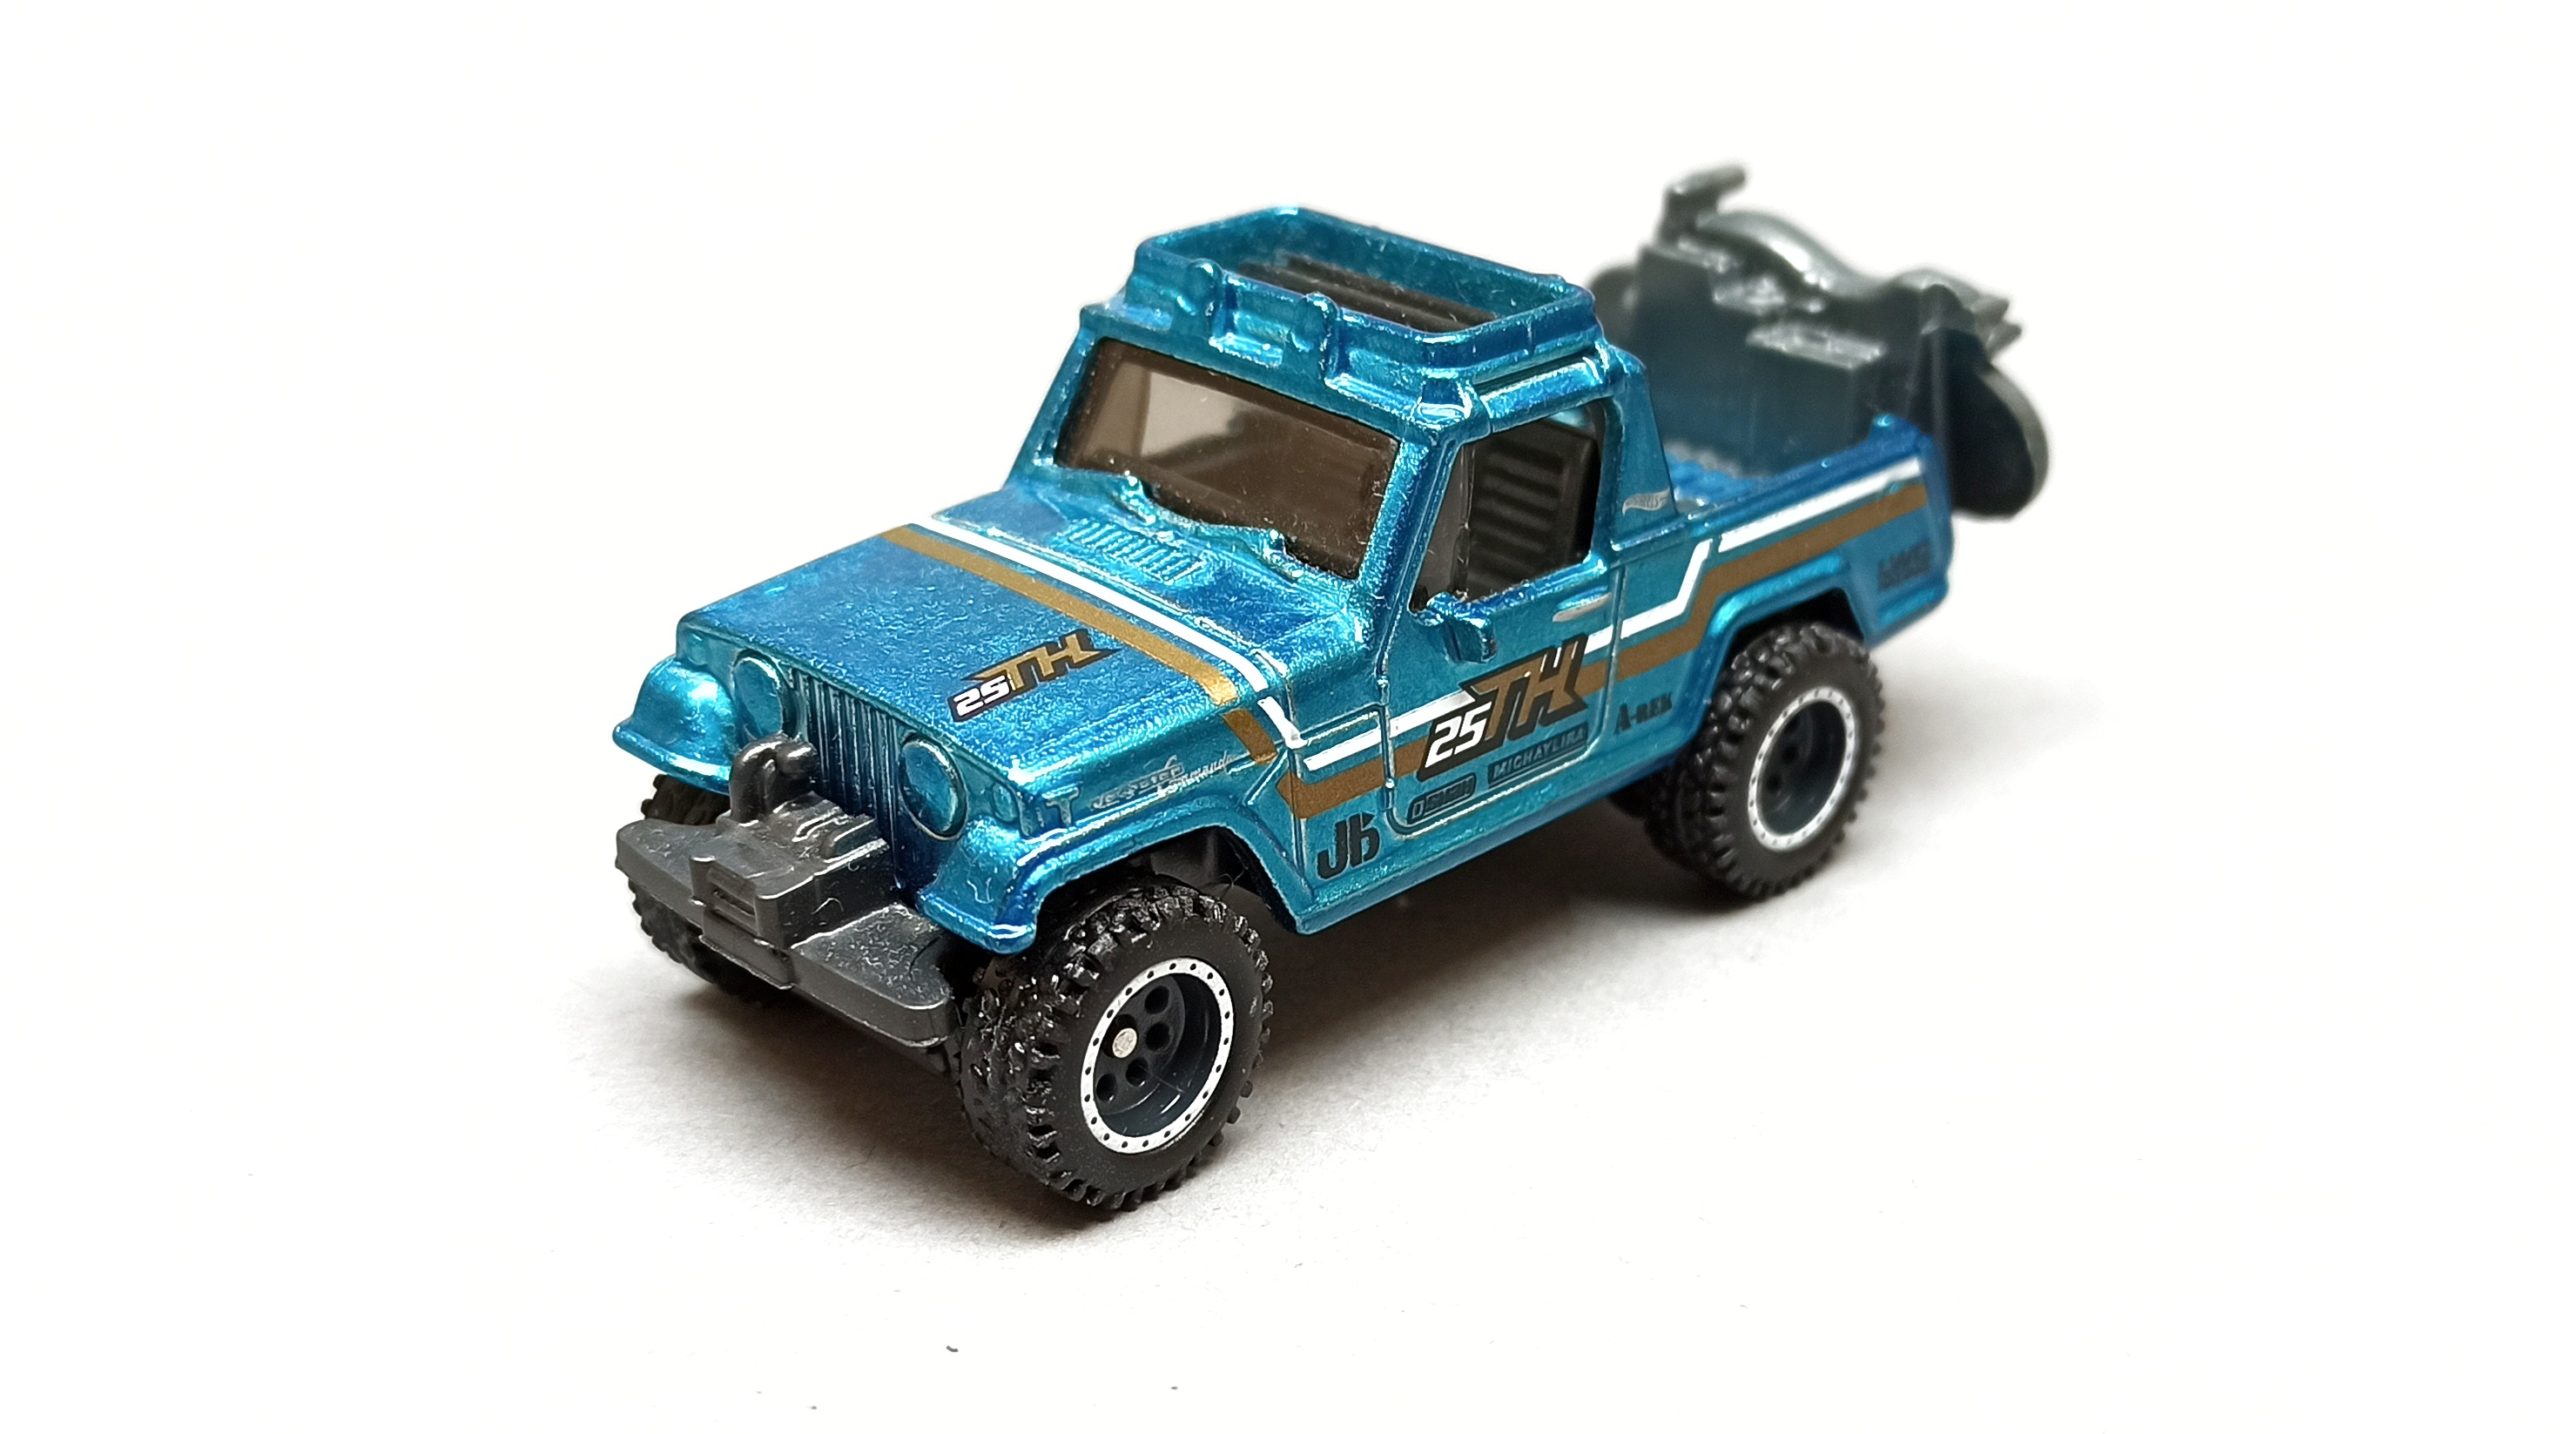 Hot Wheels '67 Jeepster Commando (GHG14) 2020 (71/250) Baja Blazers (1/10) spectraflame ocean blue Super Treasure Hunt (STH)